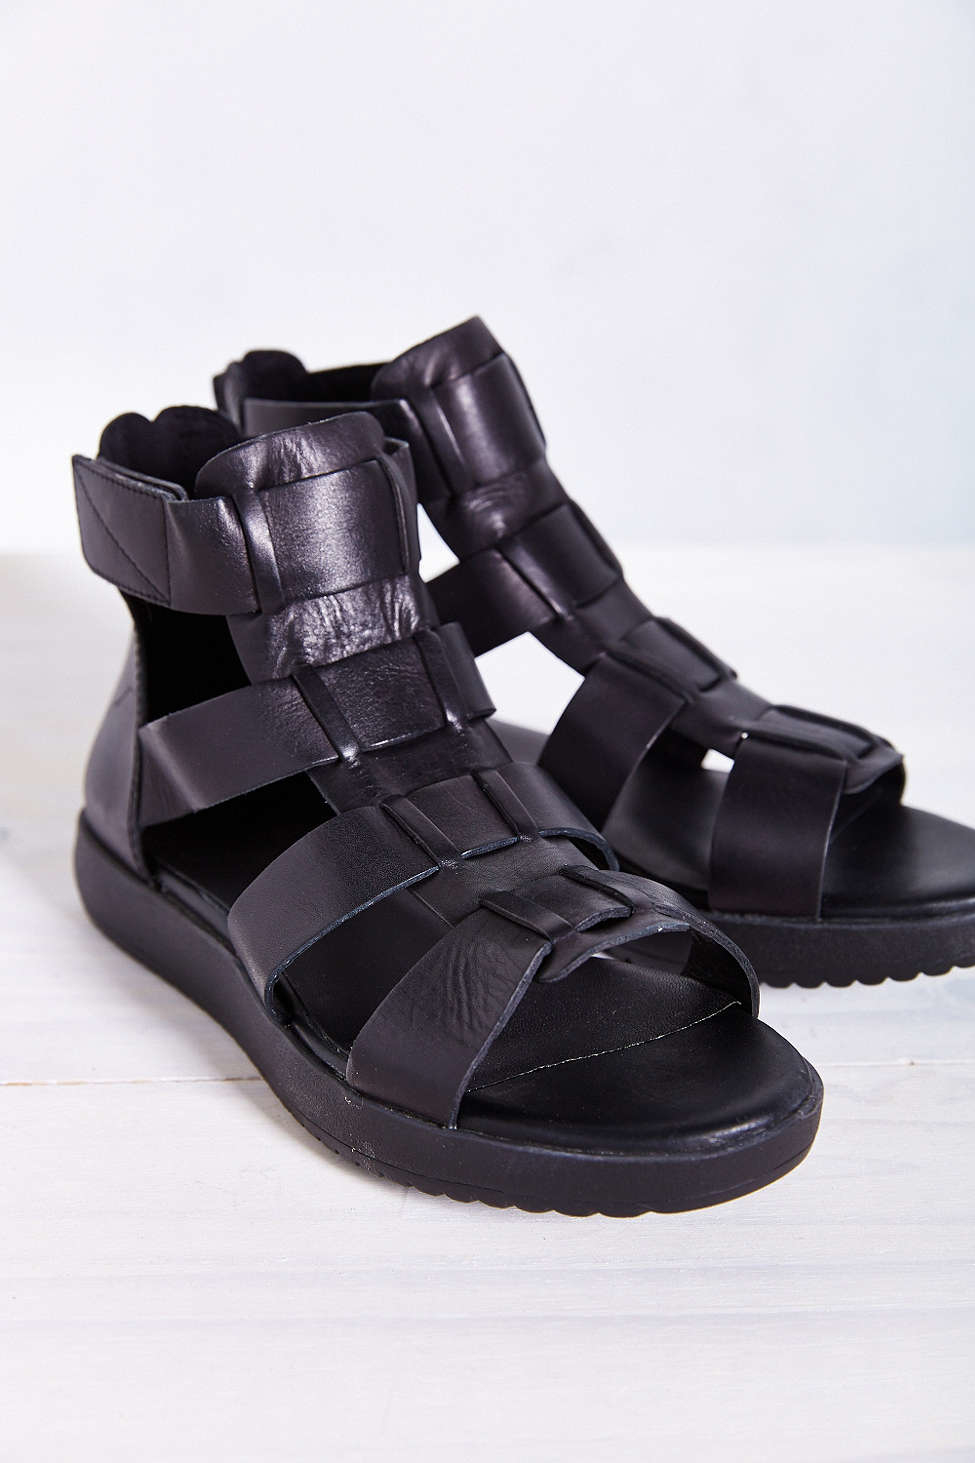 Vagabond Leather Flora Gladiator Sandal in Black - Lyst